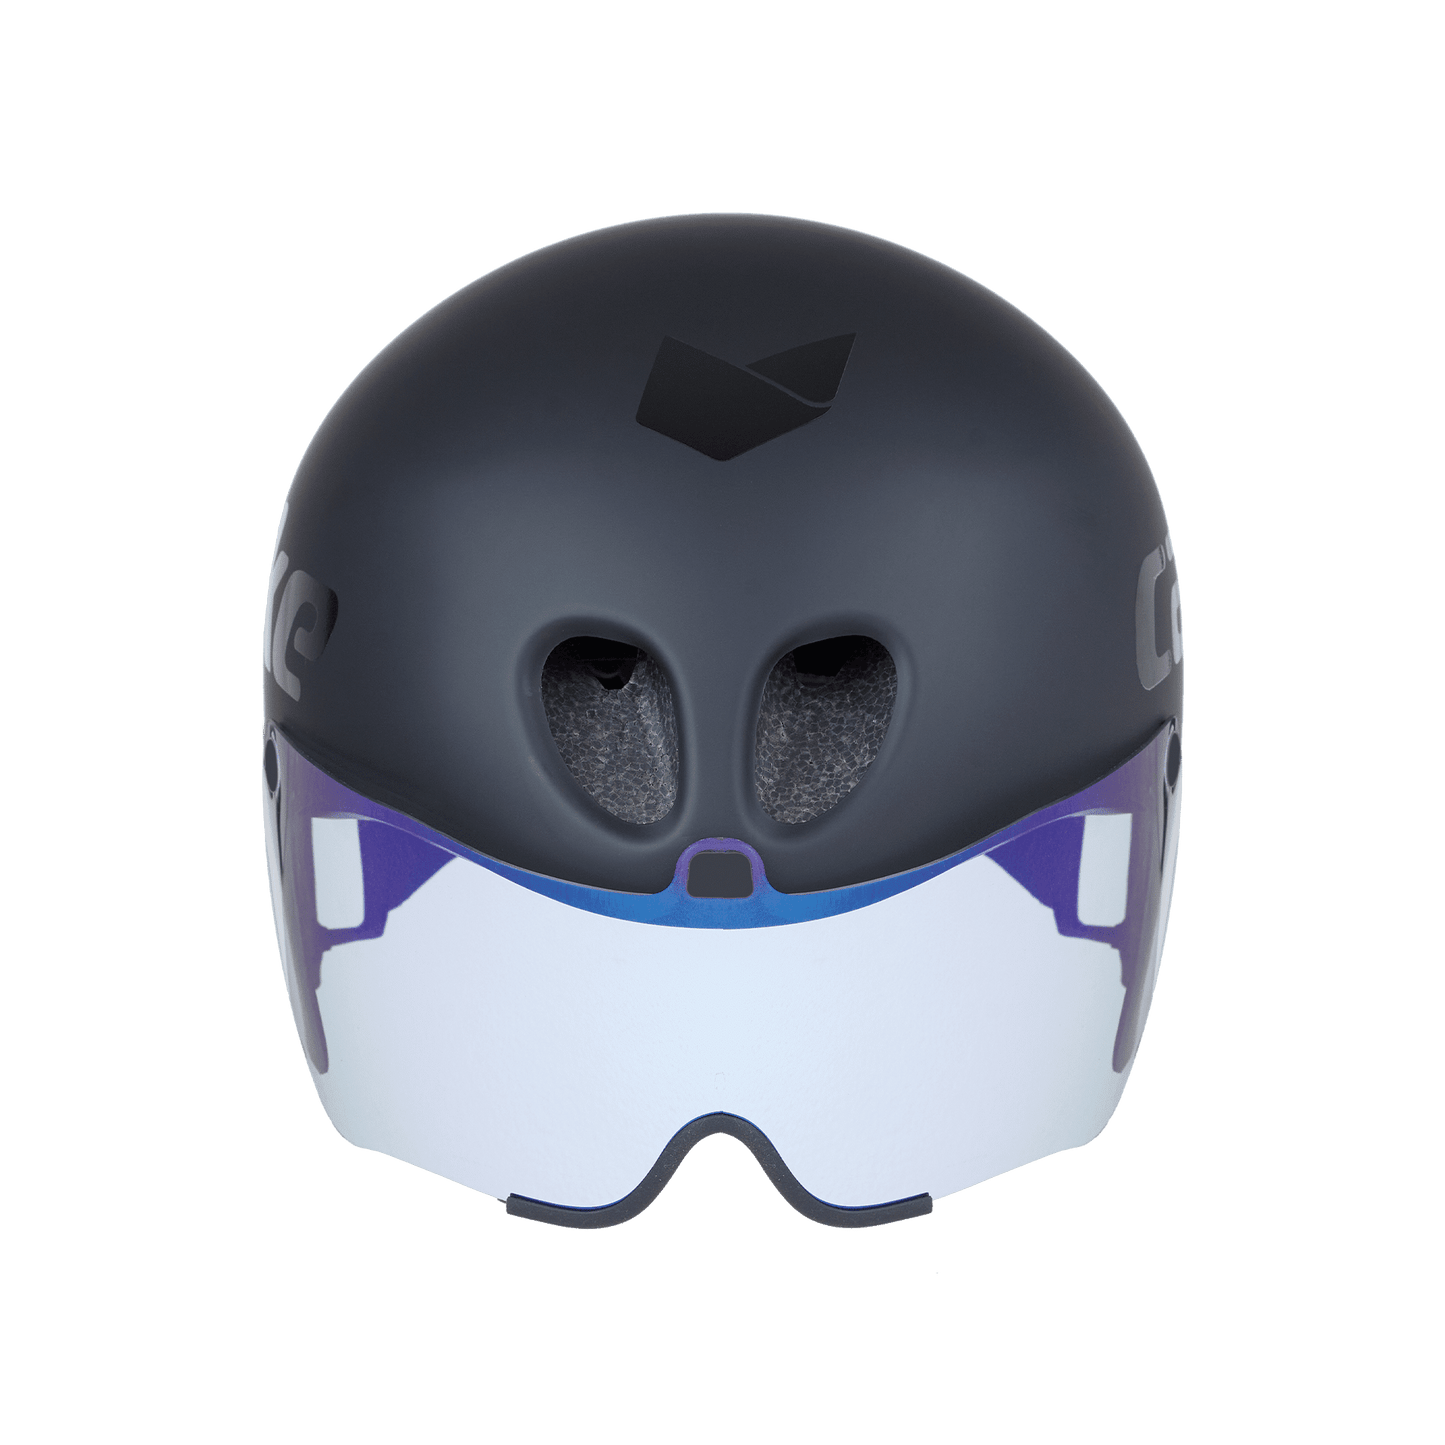 A product picture of the Catlike Rapid Tri Aero TT Helmet